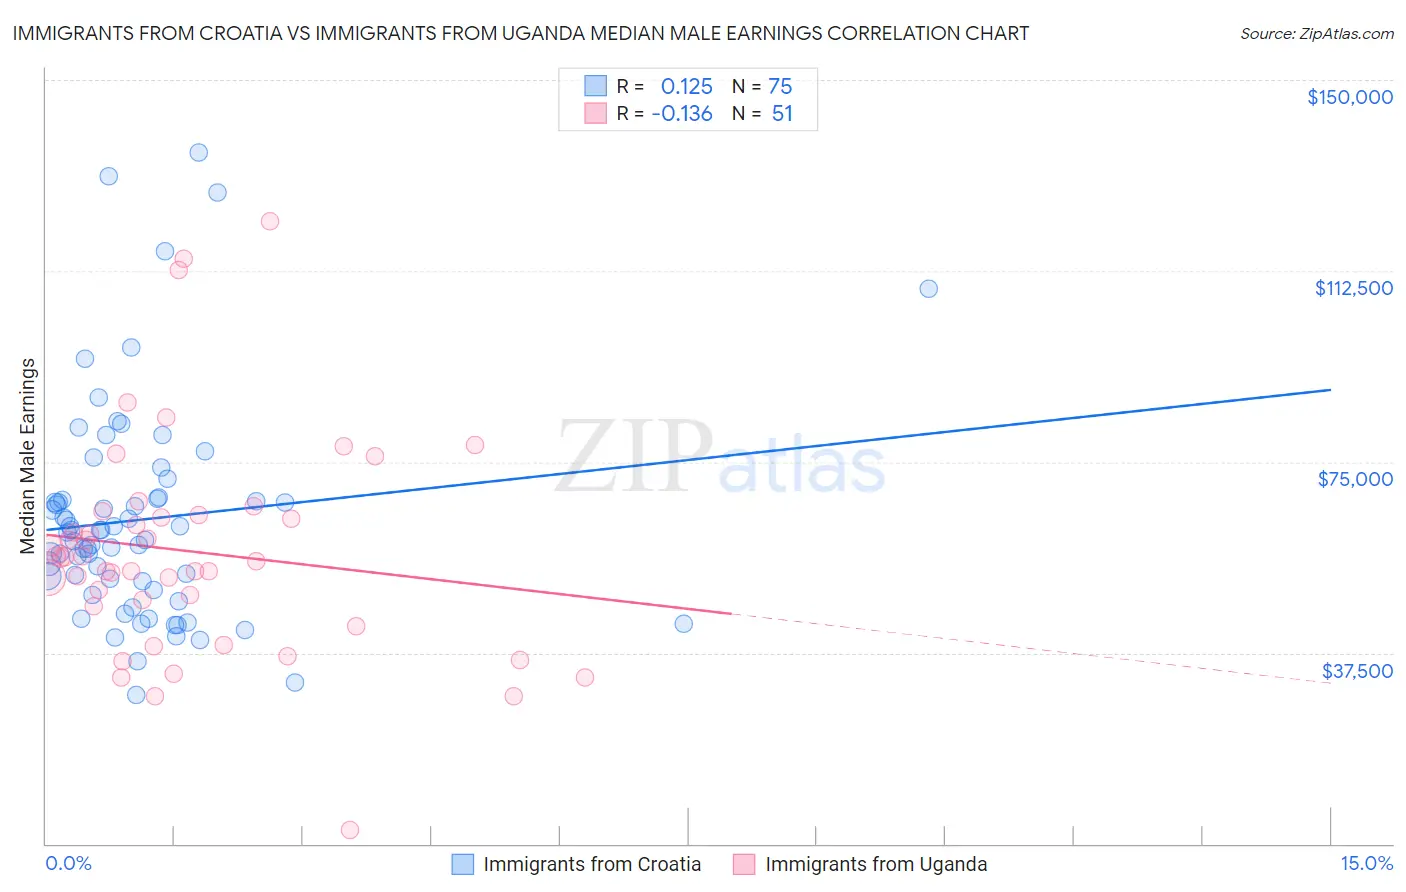 Immigrants from Croatia vs Immigrants from Uganda Median Male Earnings